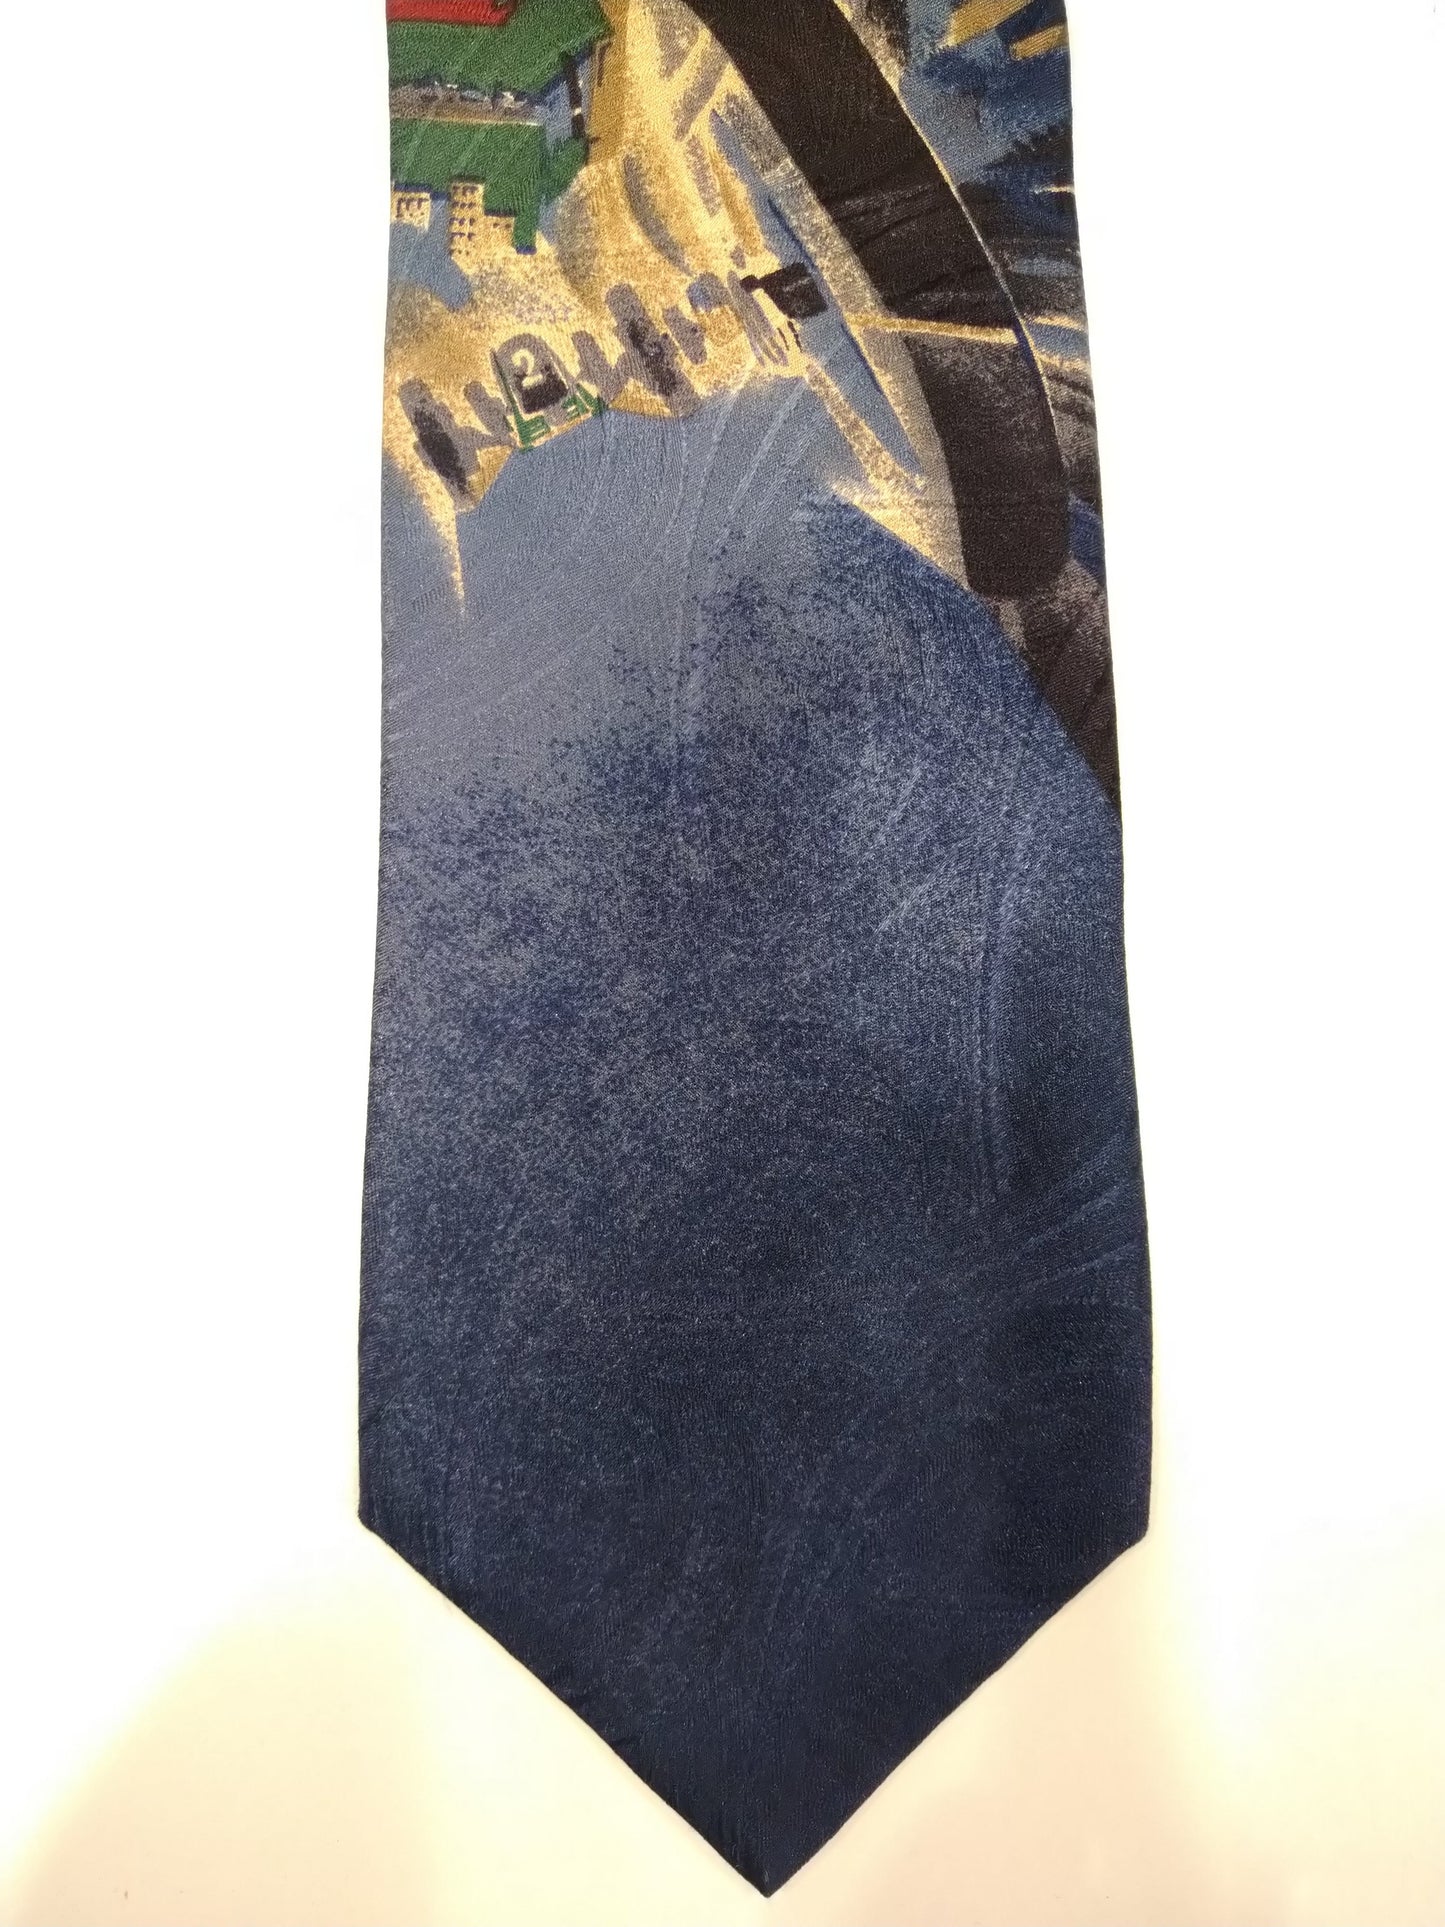 Hemley vintage zijde stropdas. Prachtig vintage motief.